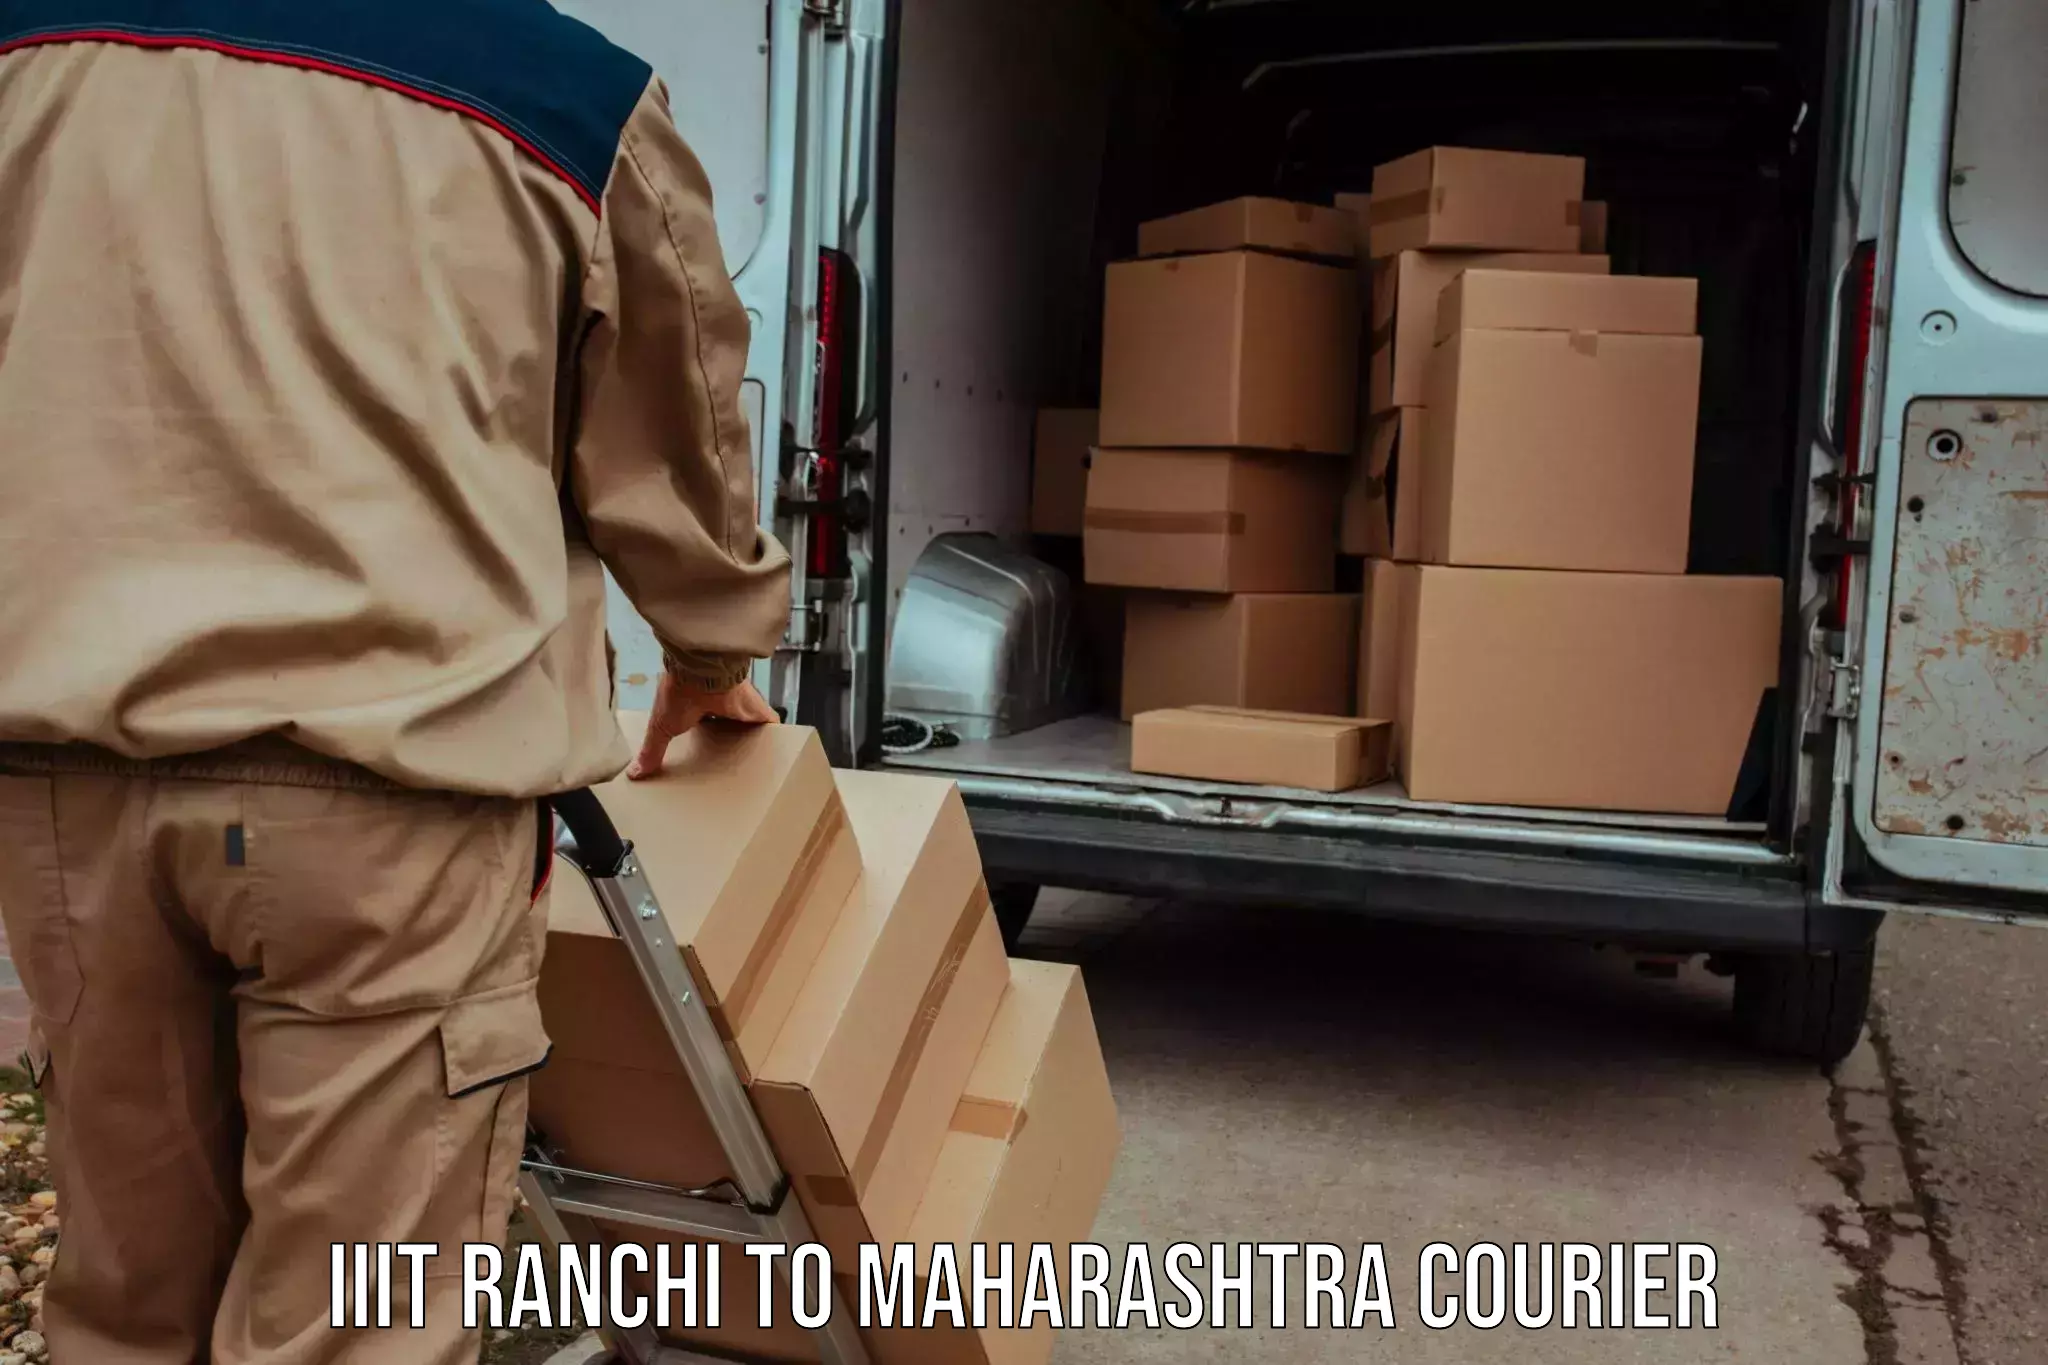 Next day courier IIIT Ranchi to Maharashtra